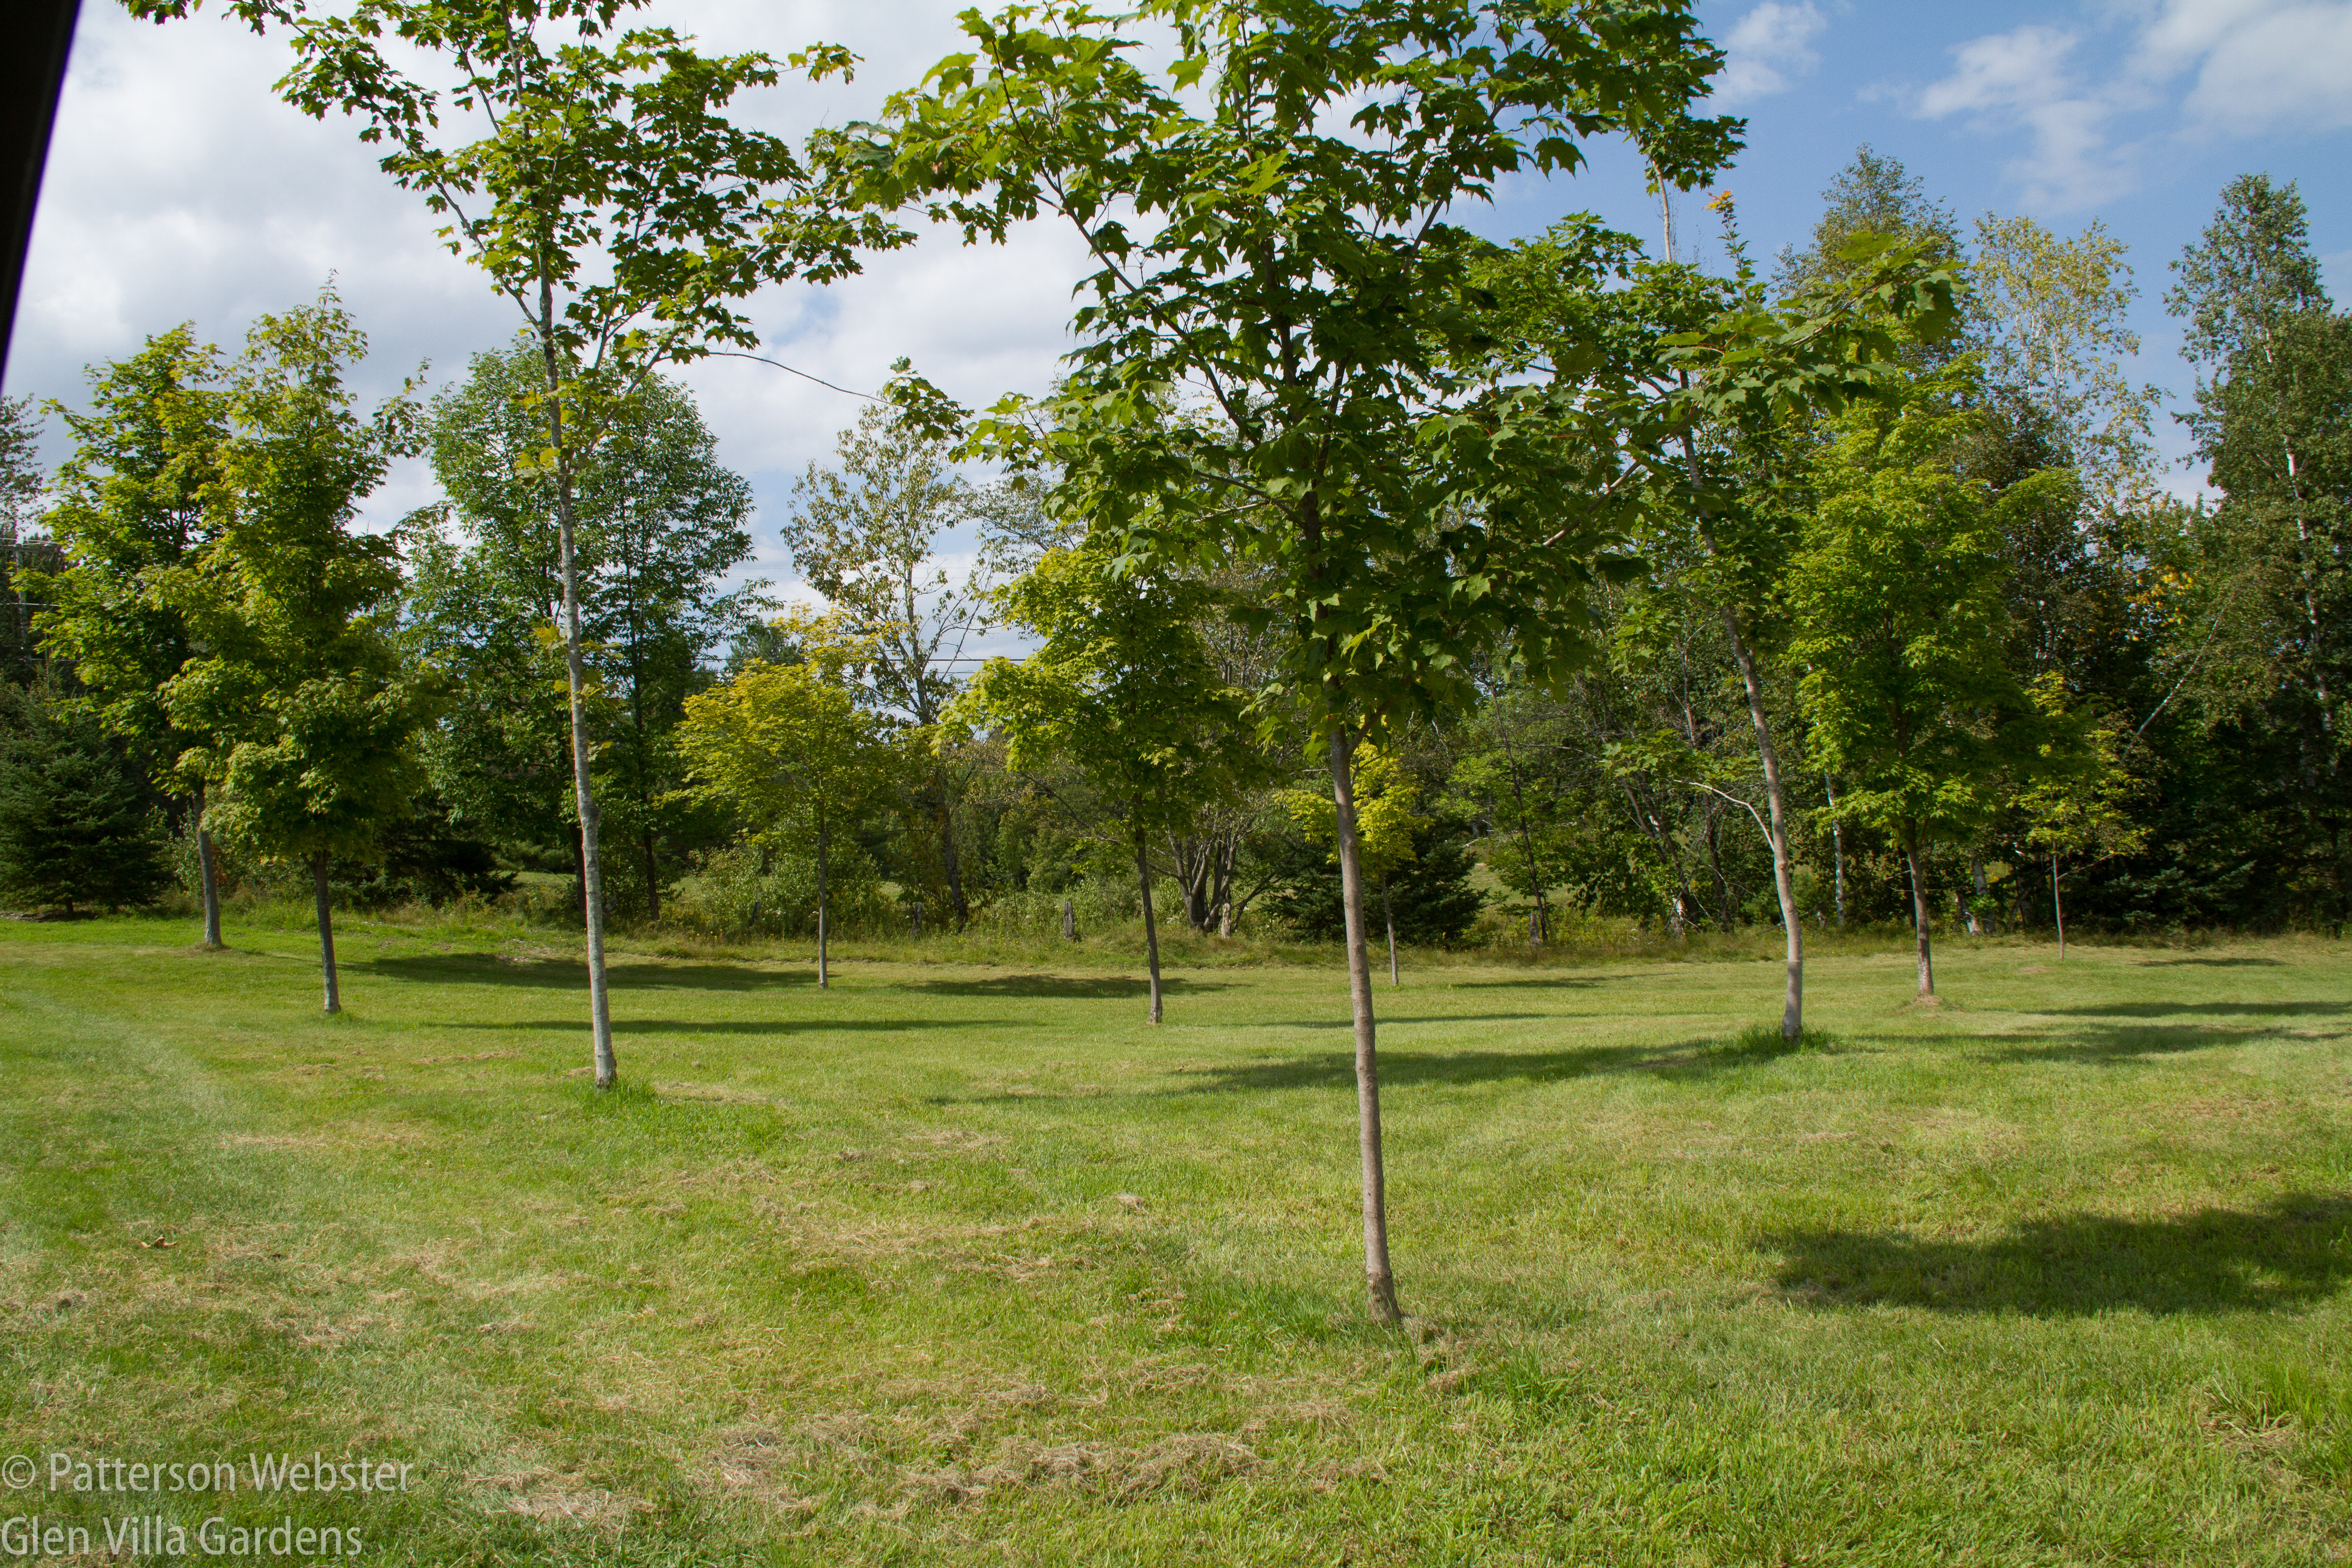 Ten maple trees mark the birth of ten grandchildren.